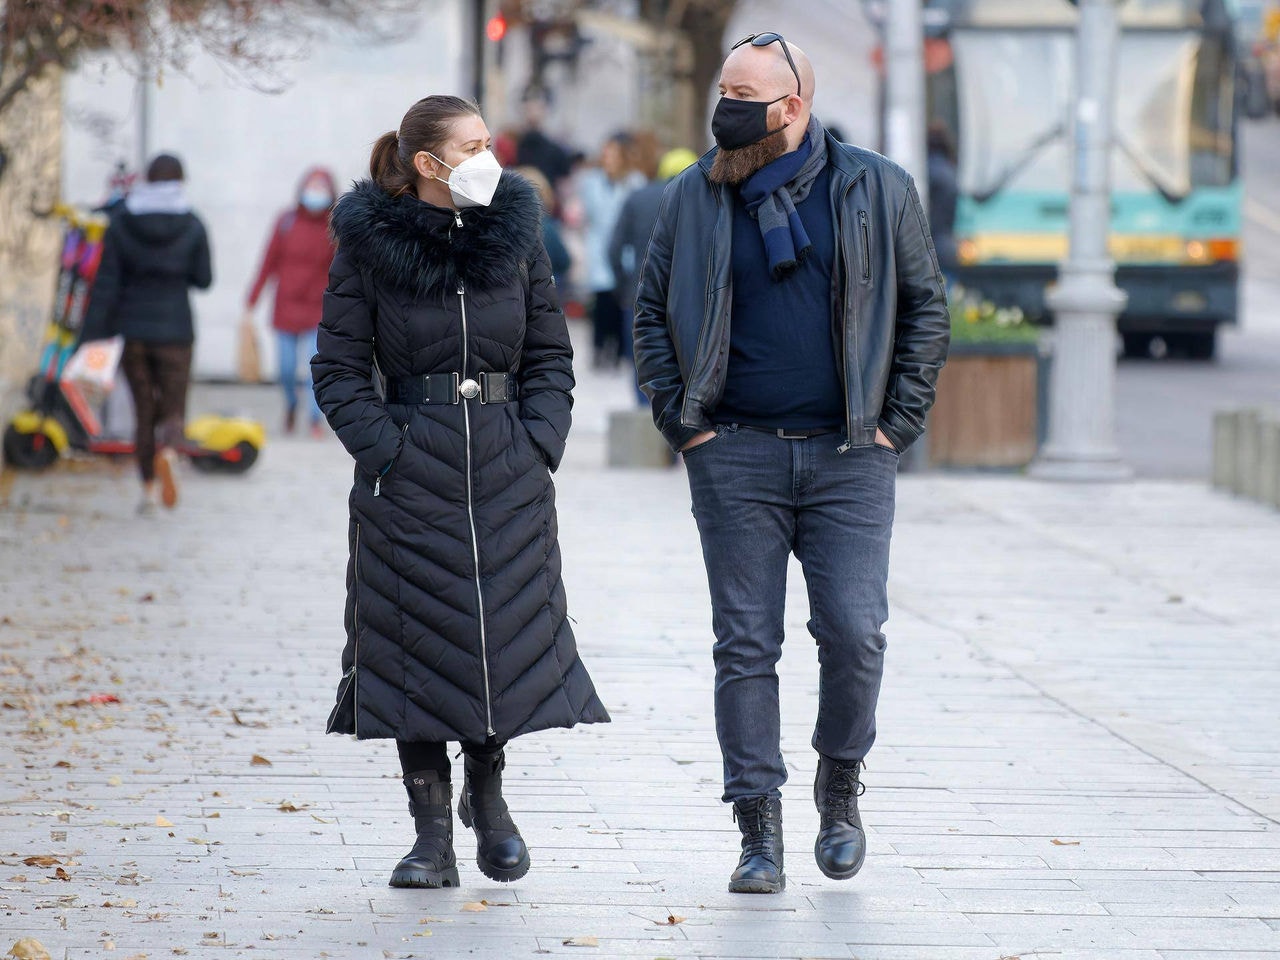 Foto ilustrativa de pessoas usando máscara contra Covid